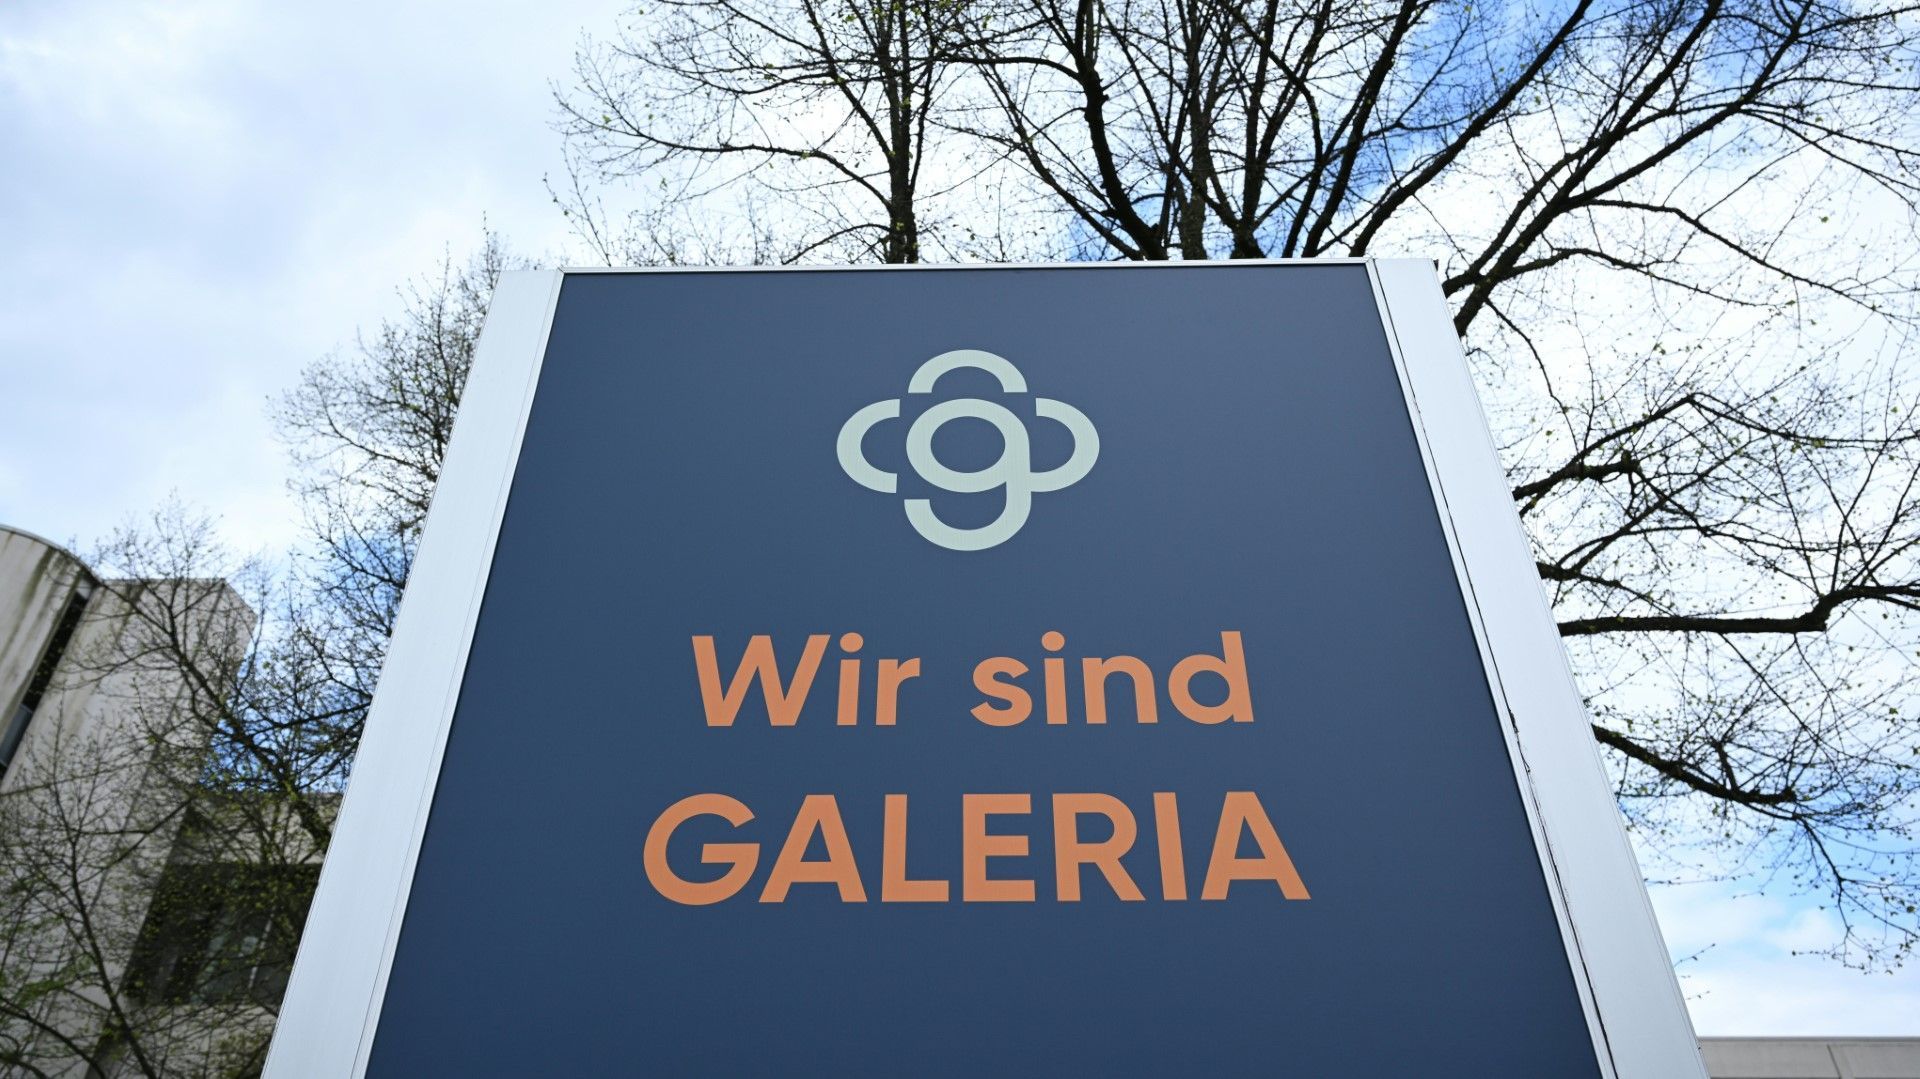 Galeria Karstadt Kaufhof plans to close 16 department stores